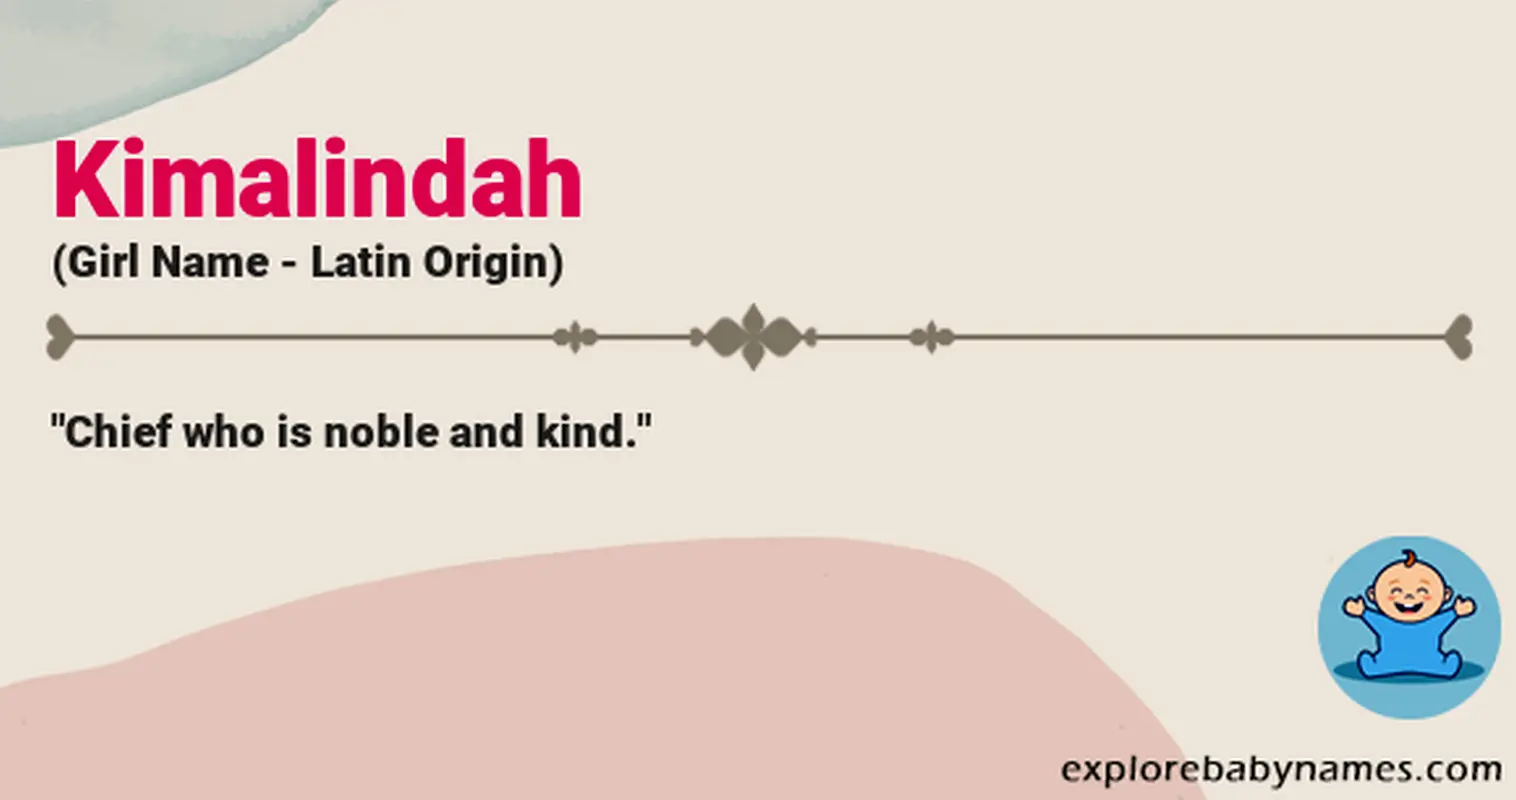 Meaning of Kimalindah